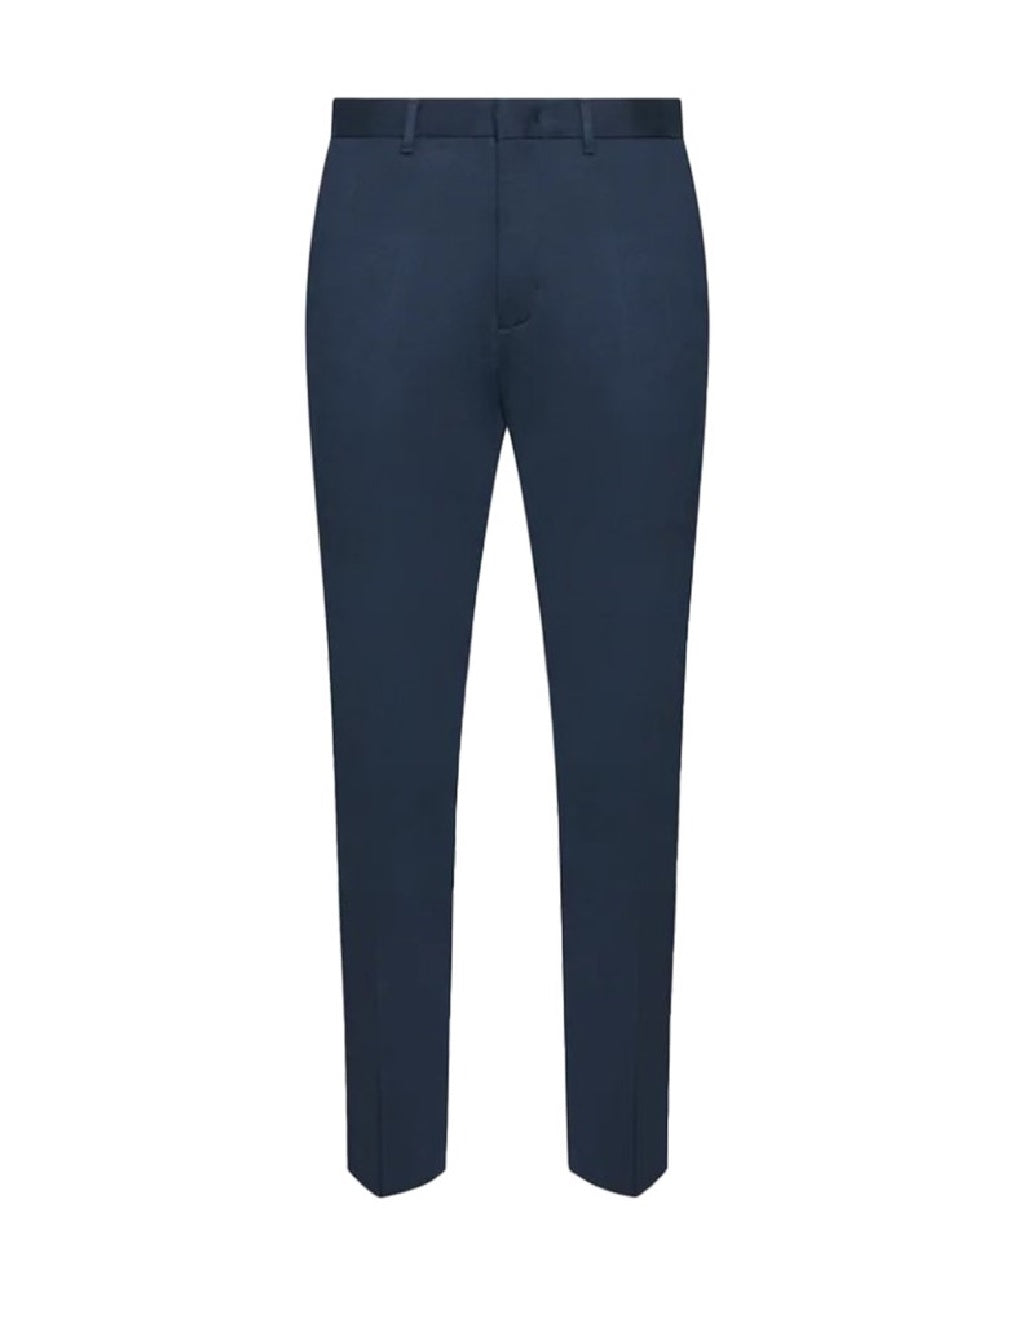 Pantalone Tommy Hilfiger modello MW0MW19857 Blu scuro